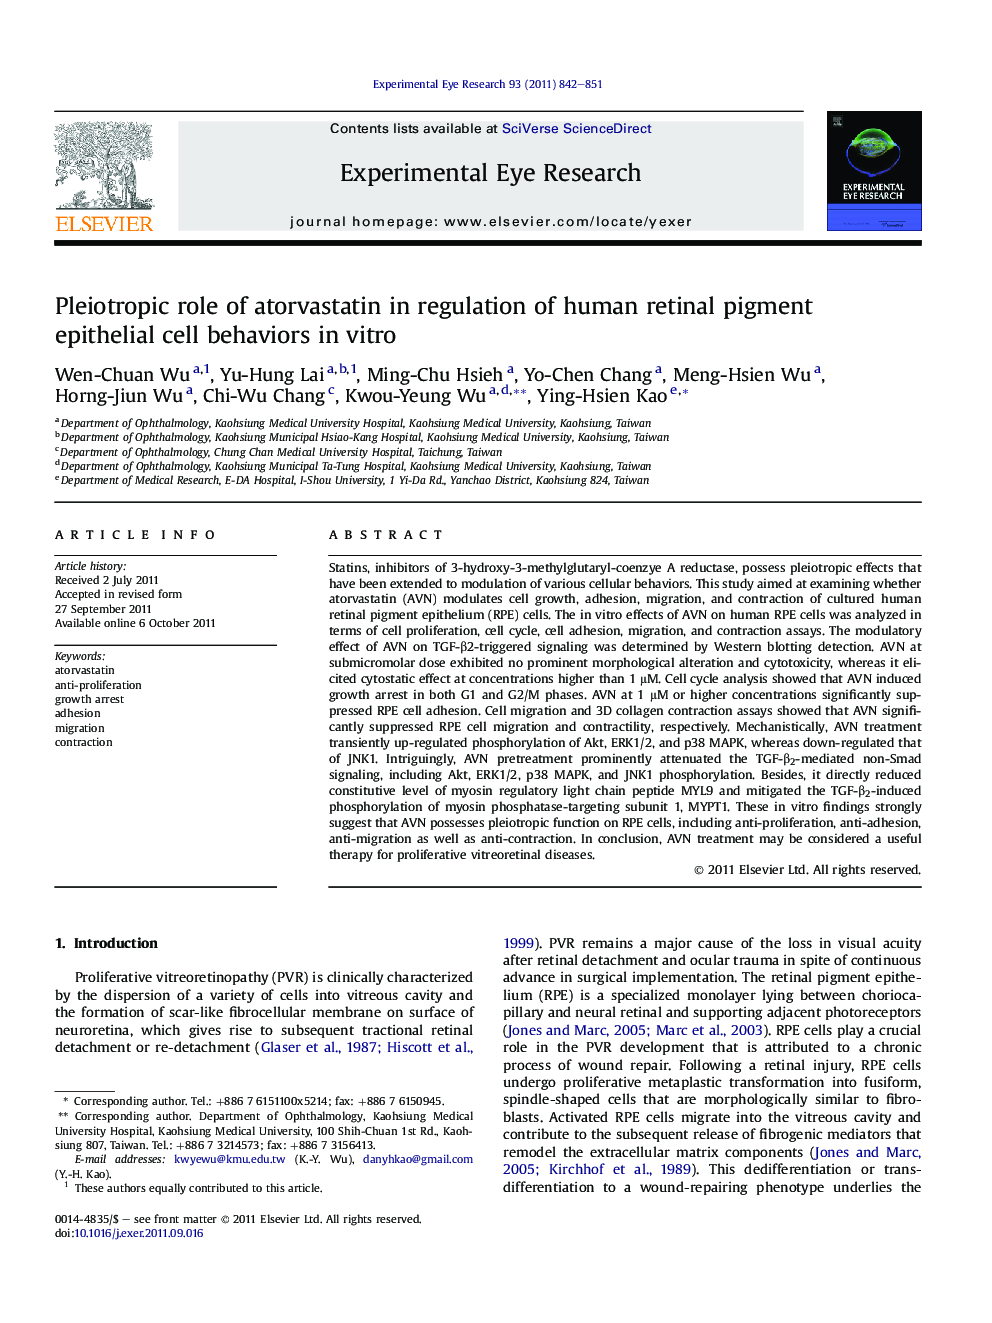 Pleiotropic role of atorvastatin in regulation of human retinal pigment epithelial cell behaviors inÂ vitro